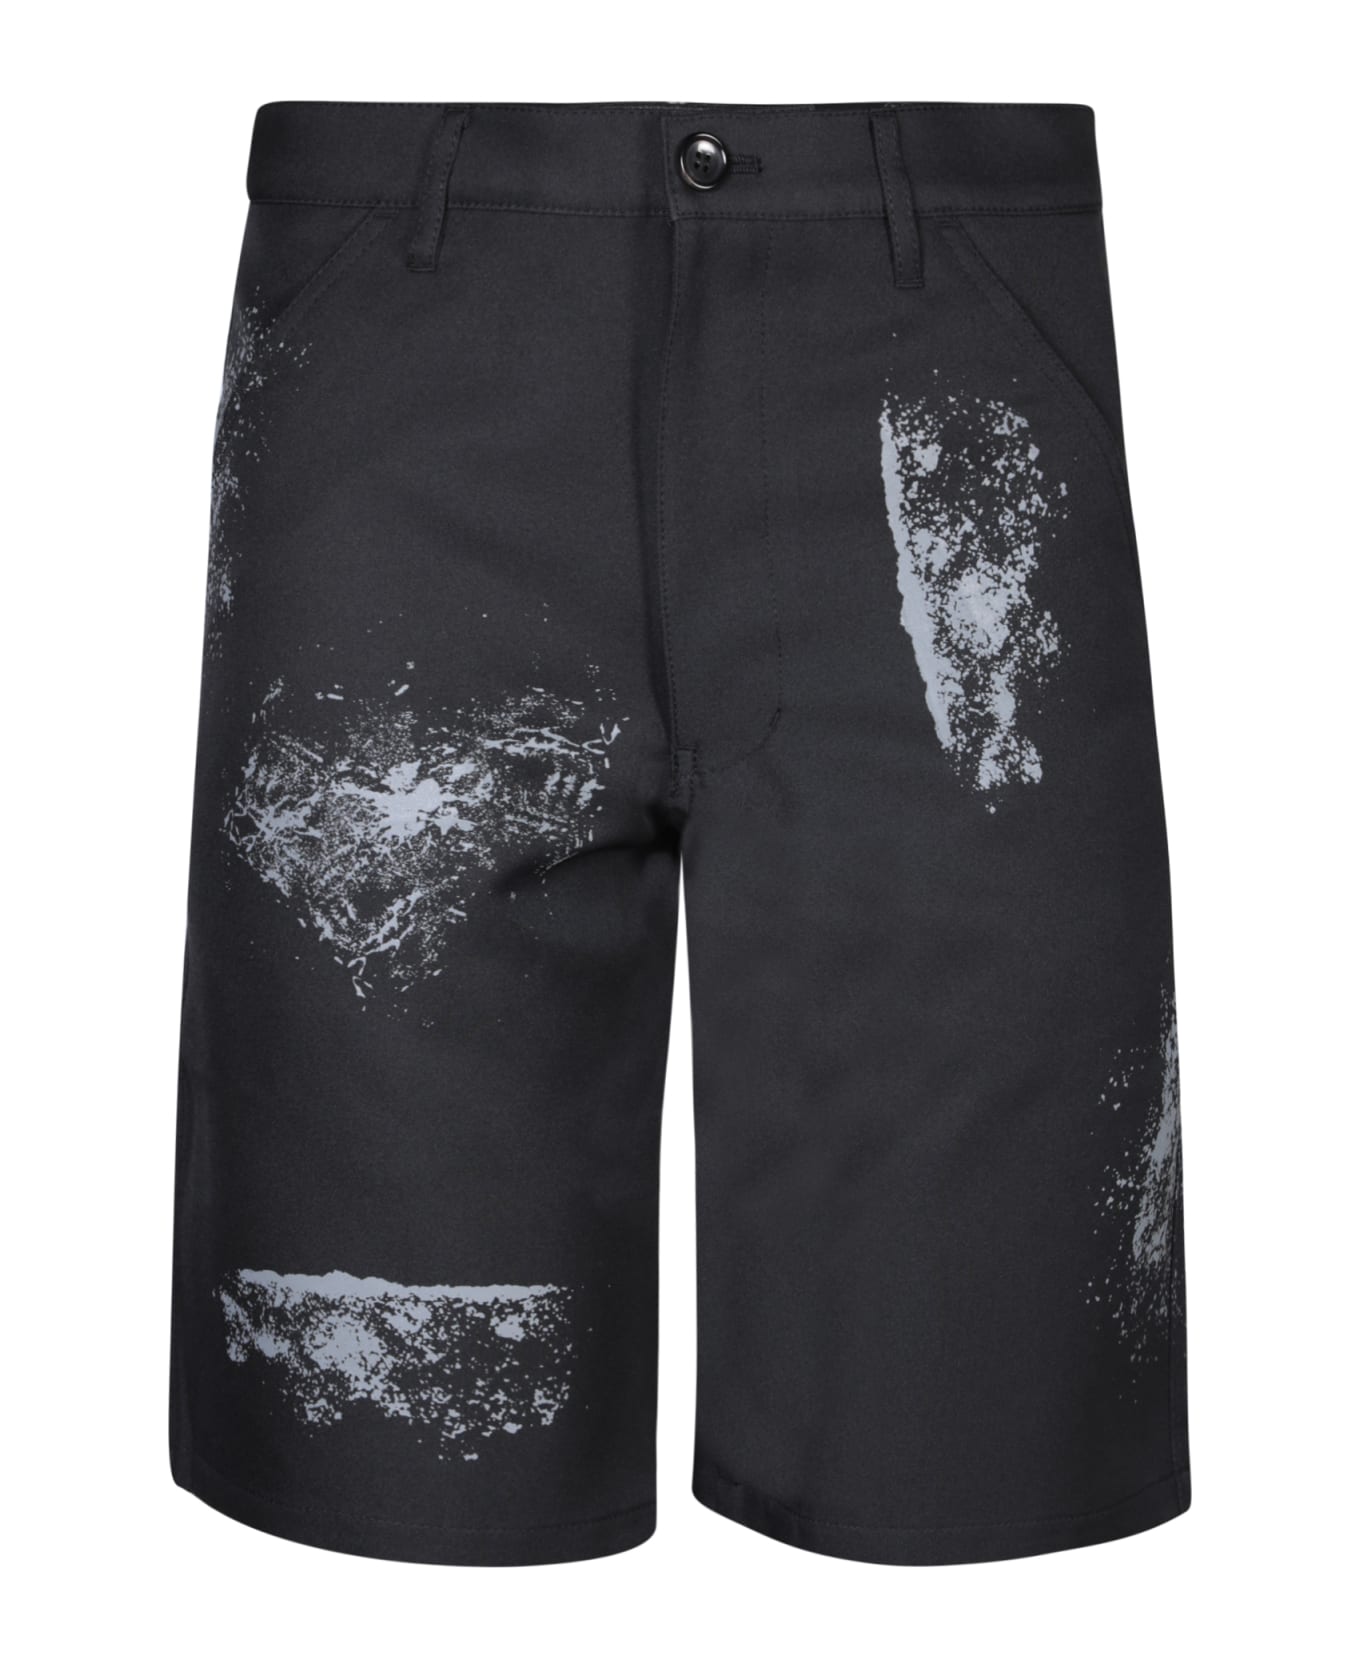 Comme des Garçons Shirt Hand Print Black Bermuda Shorts - Black